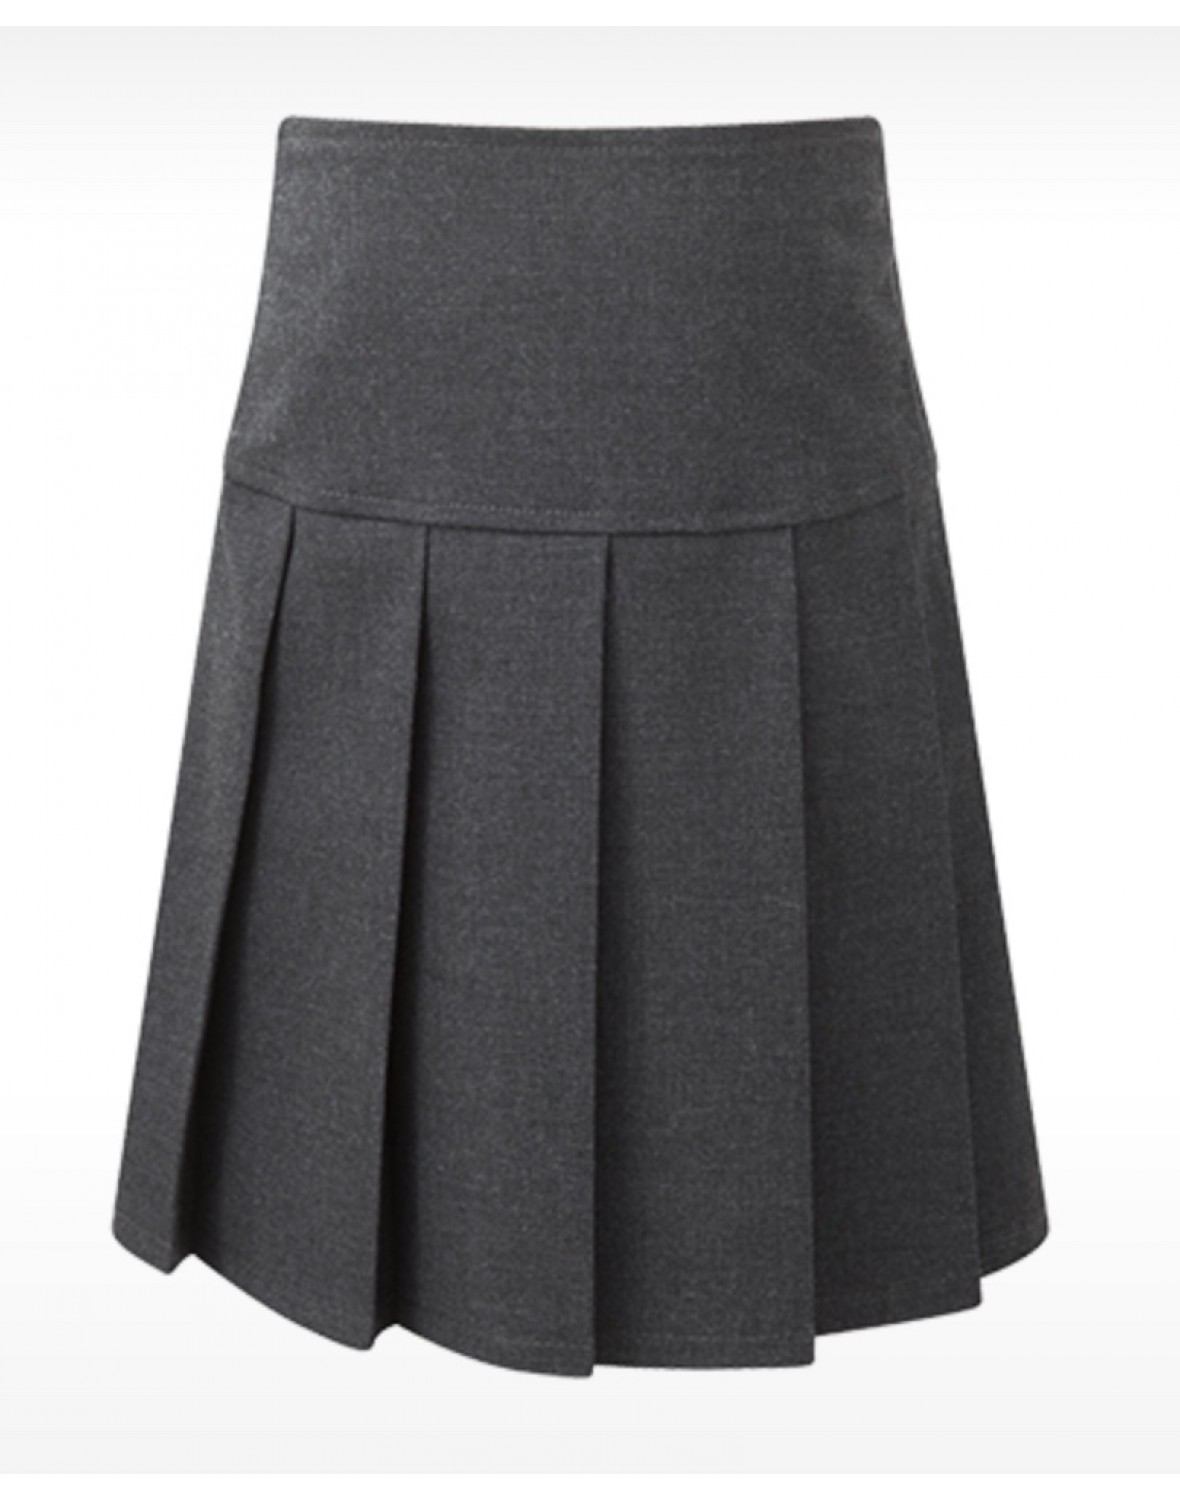 Girls Grey Skirt Age 11-12/12